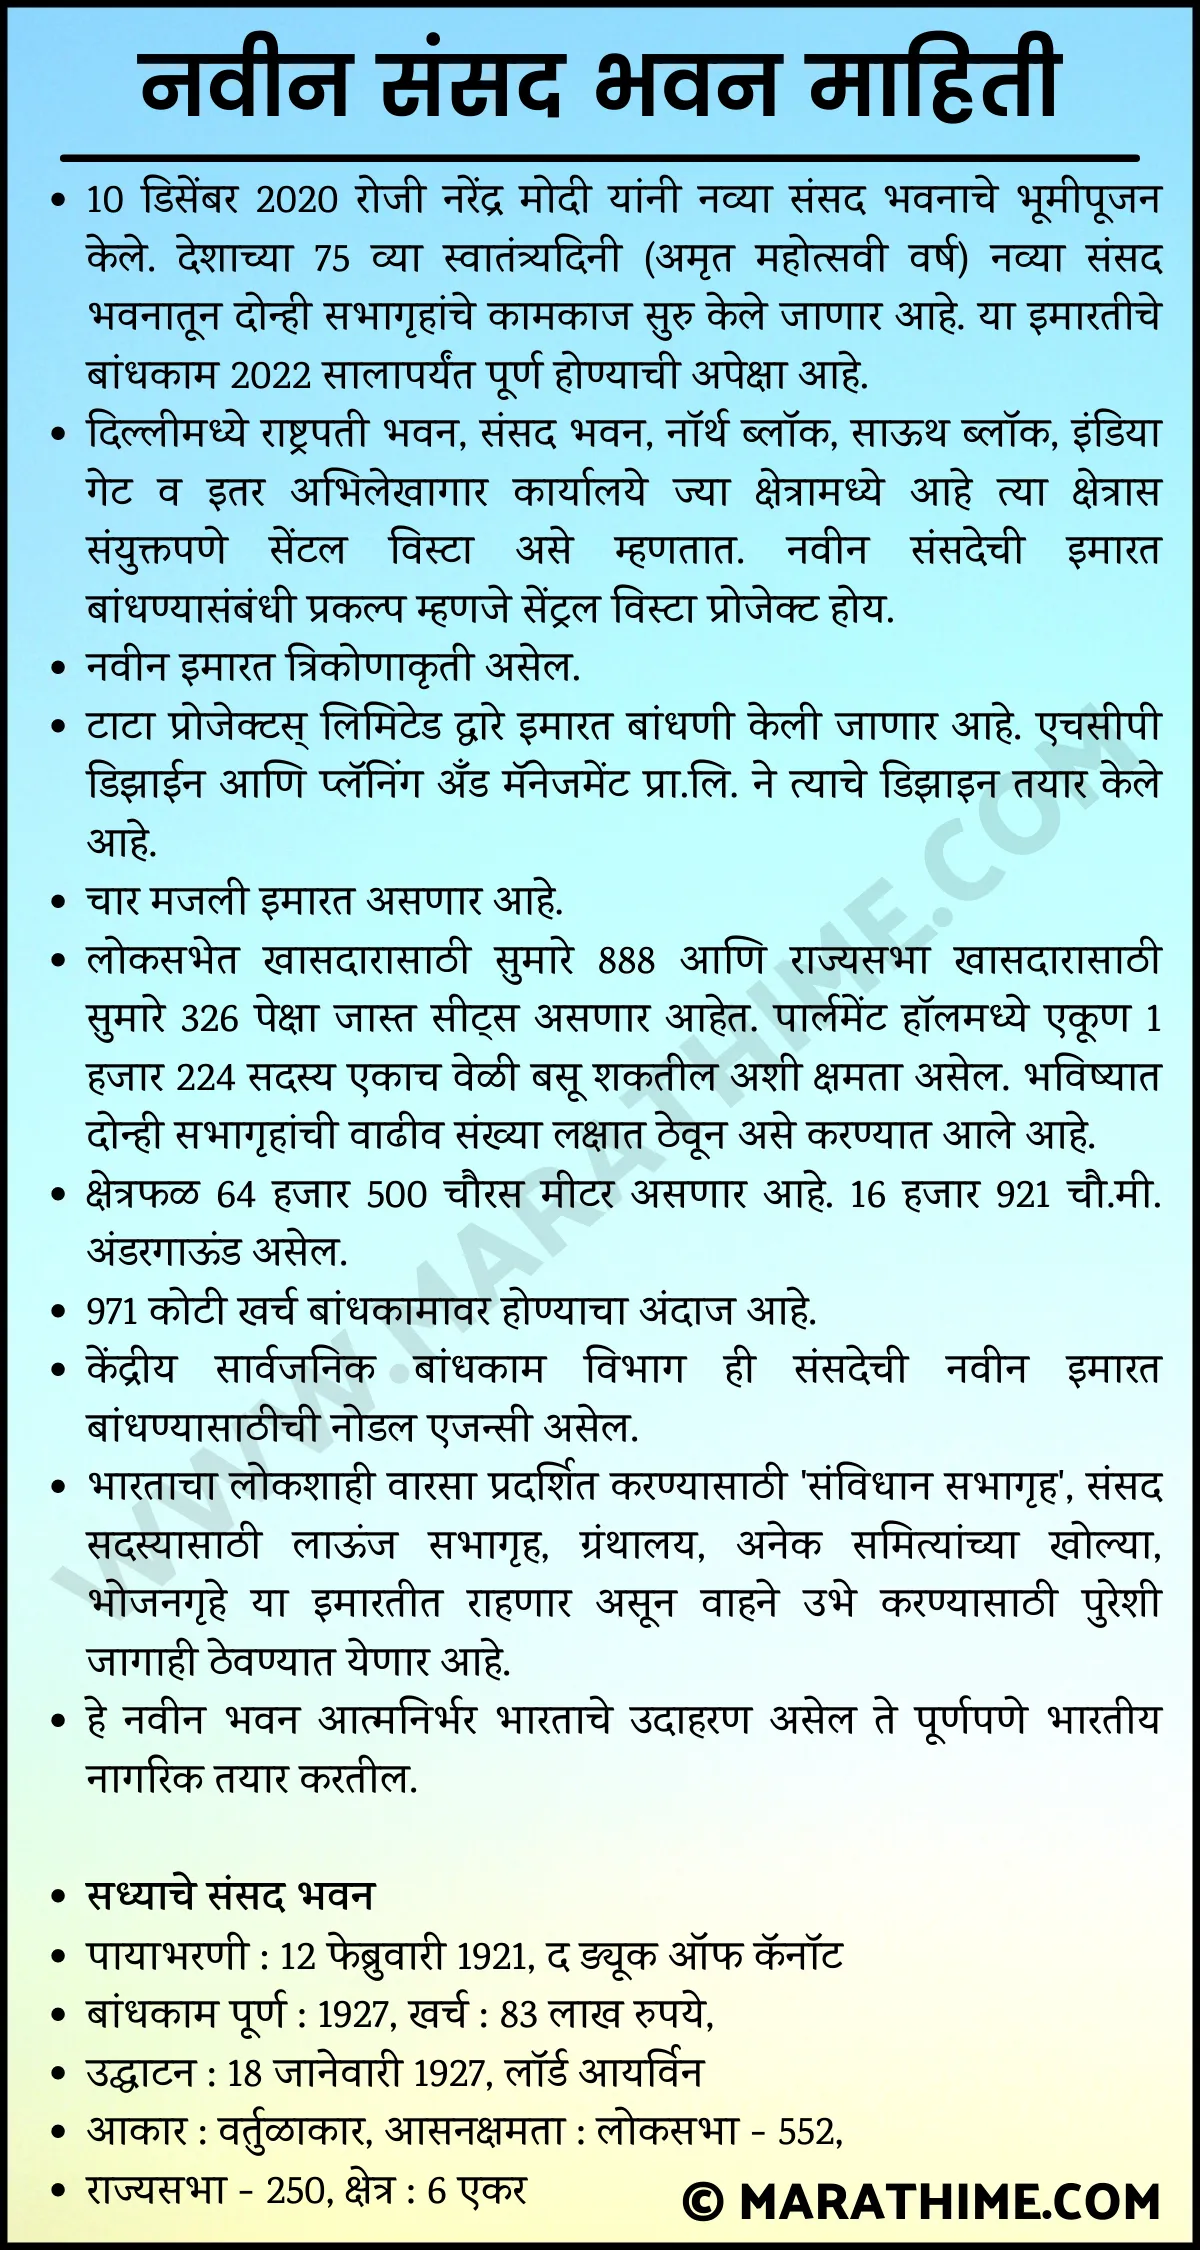 नवीन संसद भवन माहिती-new parliament house information in marathi